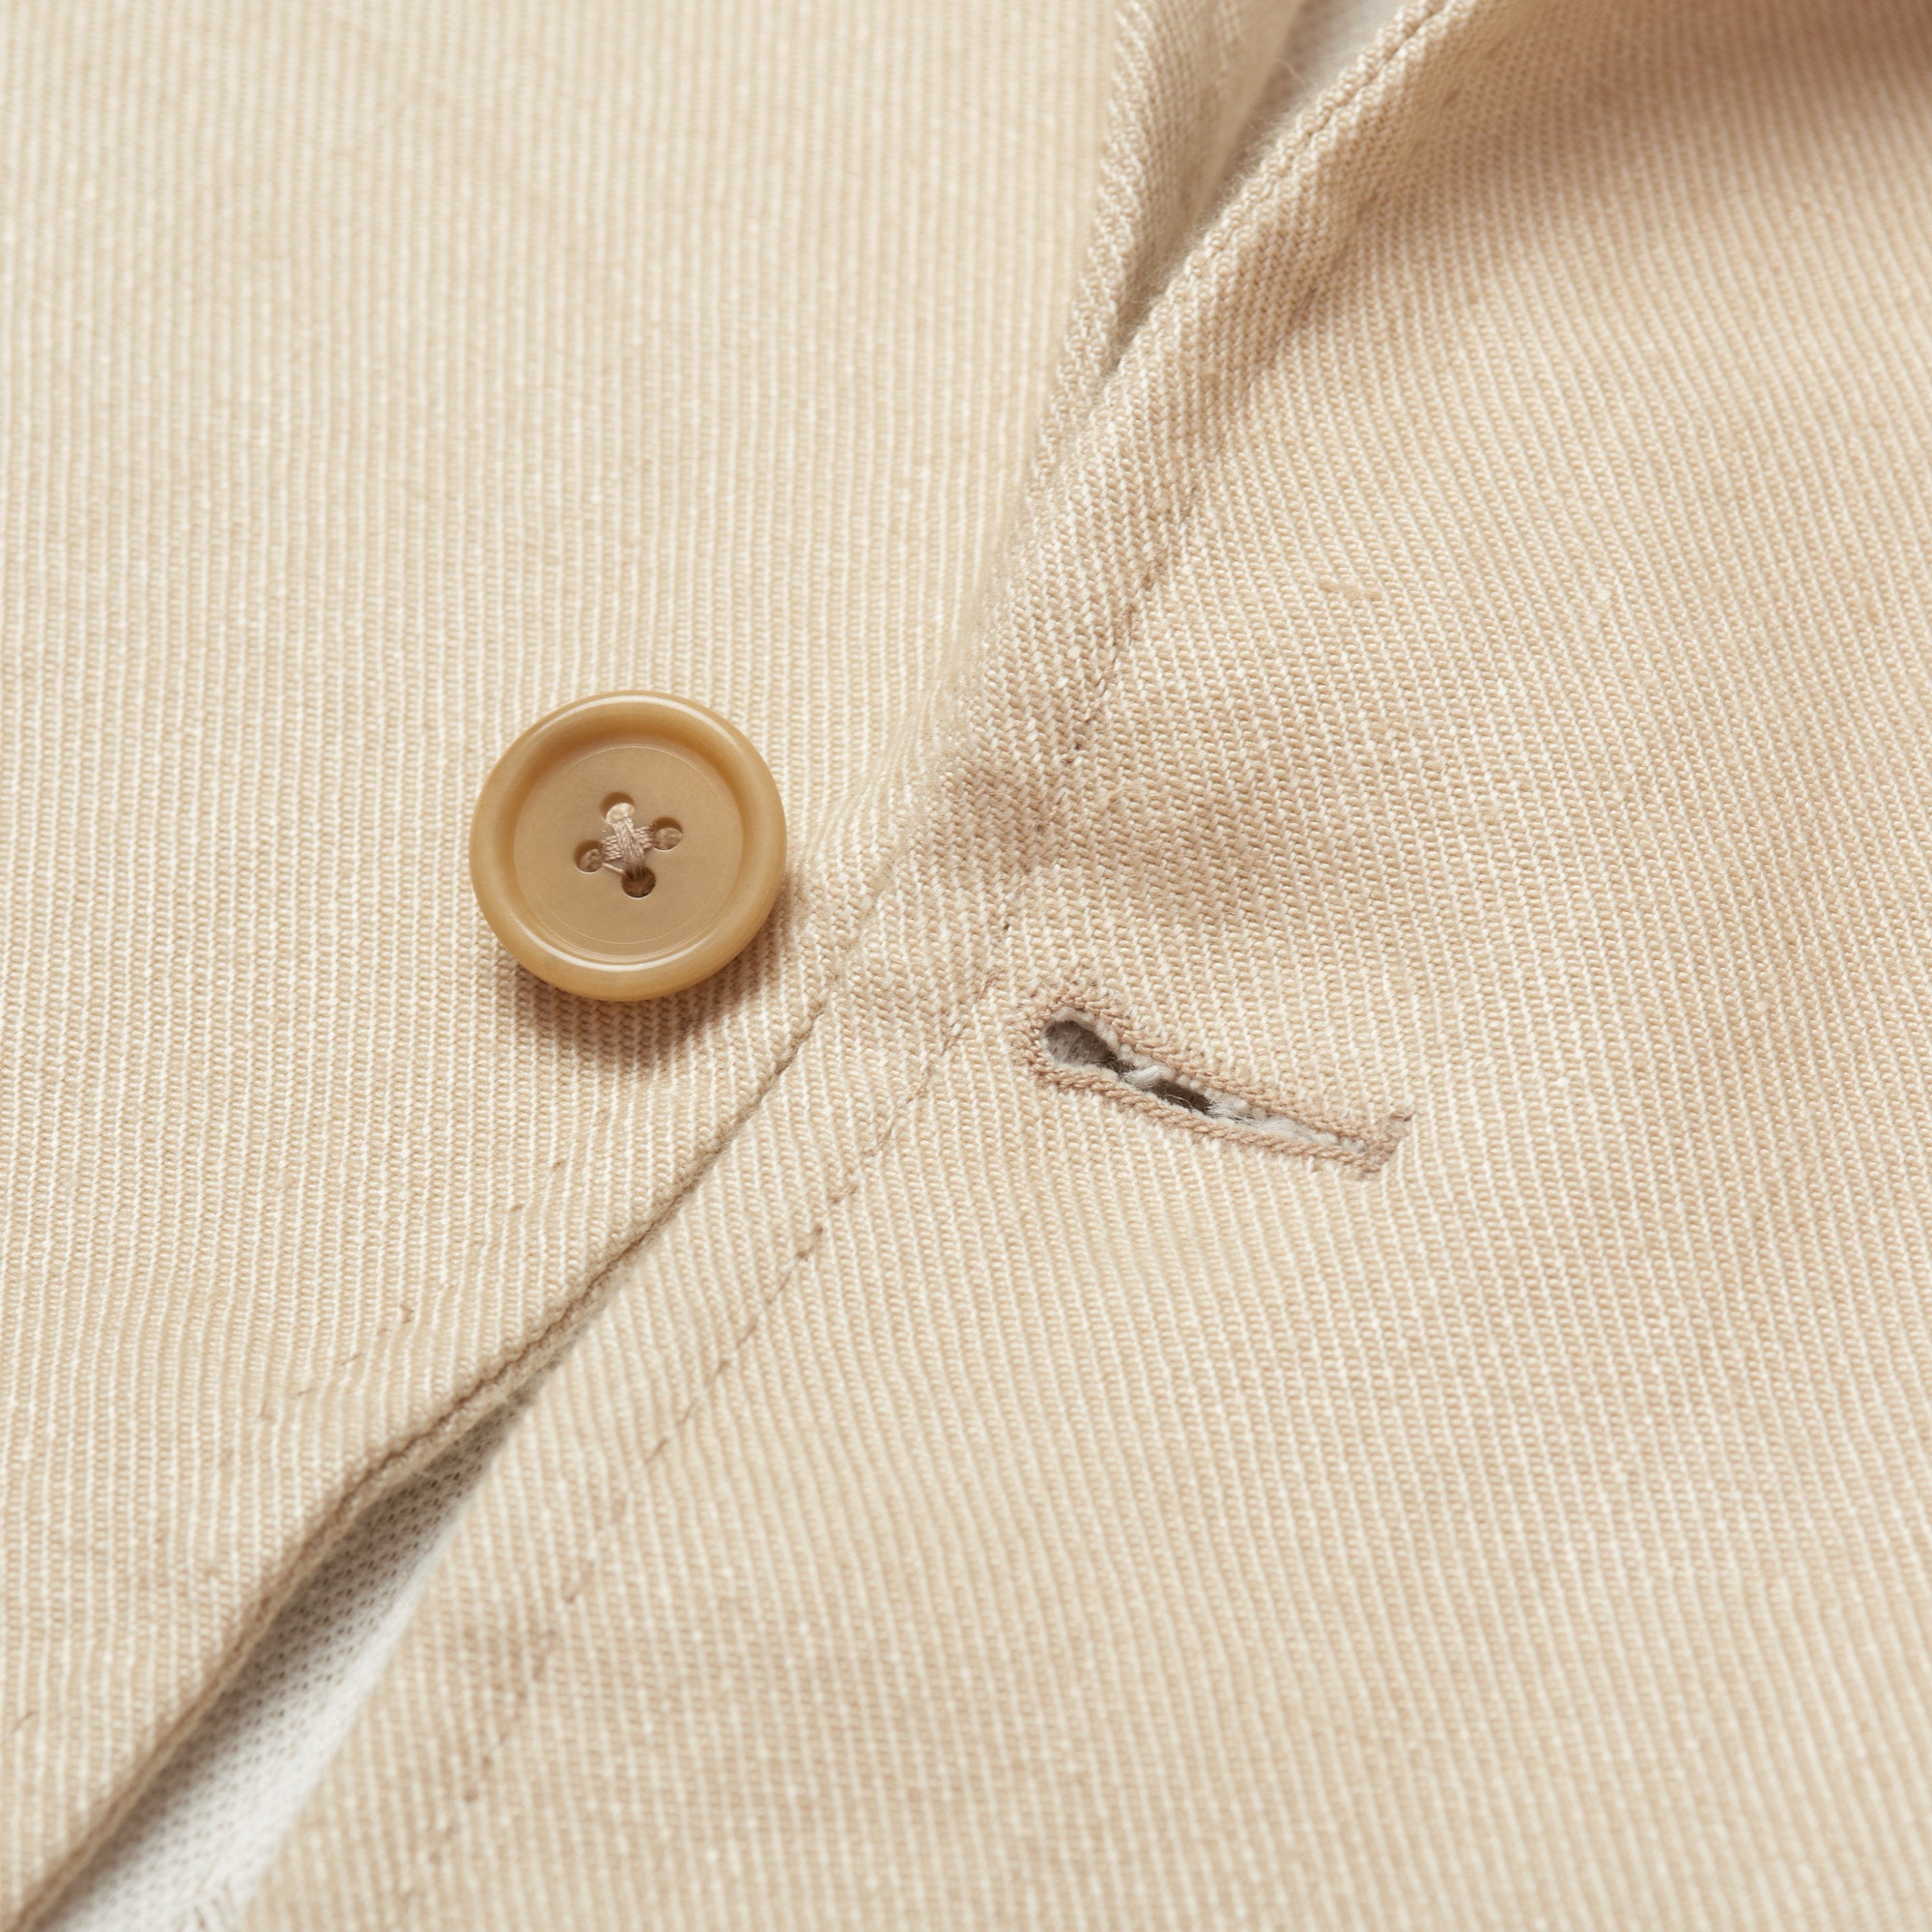 BOGLIOLI Milano Beige Linen-Cotton Twill Jacket Sport Coat EU 48 NEW US 38 BOGLIOLI